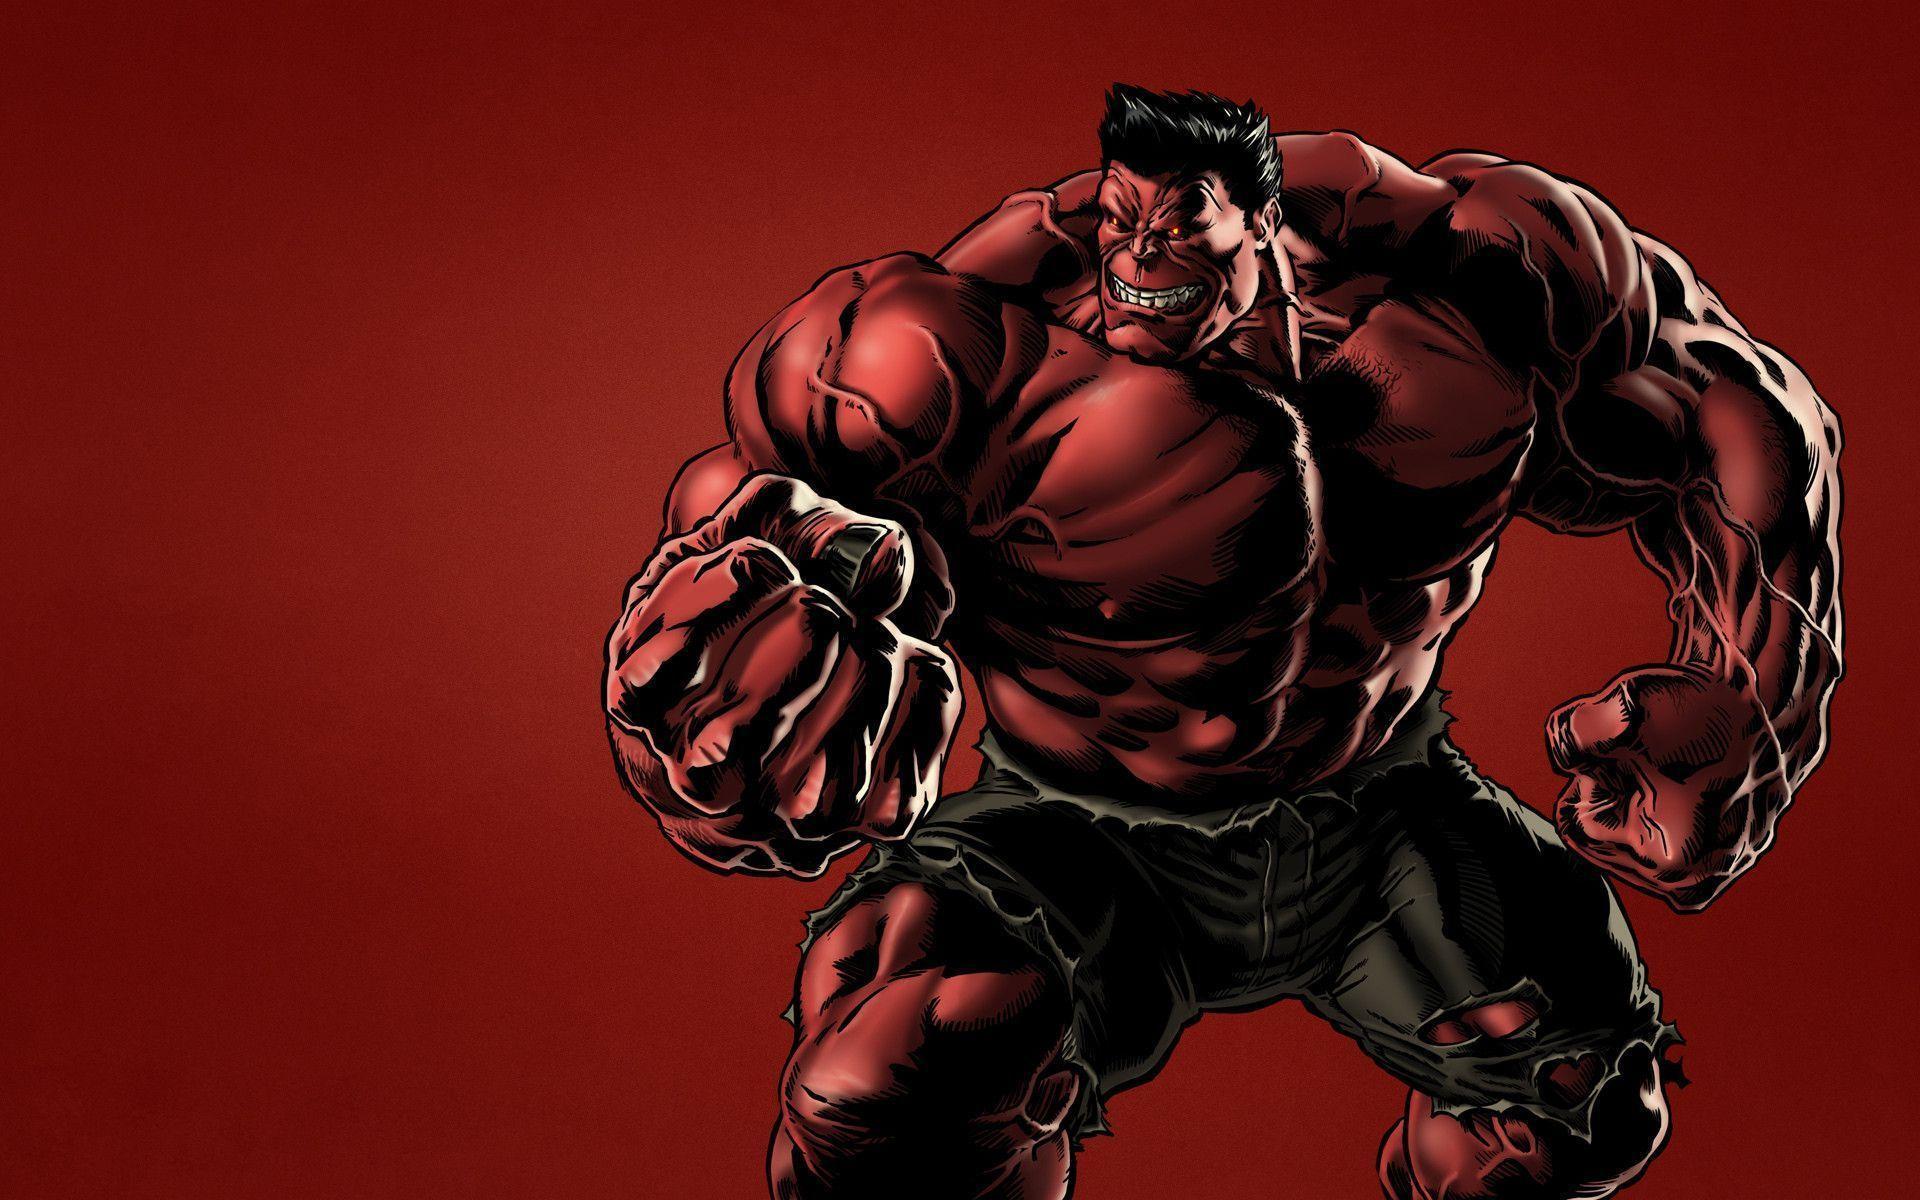 Hulk Background free download. Wallpaper, Background, Image